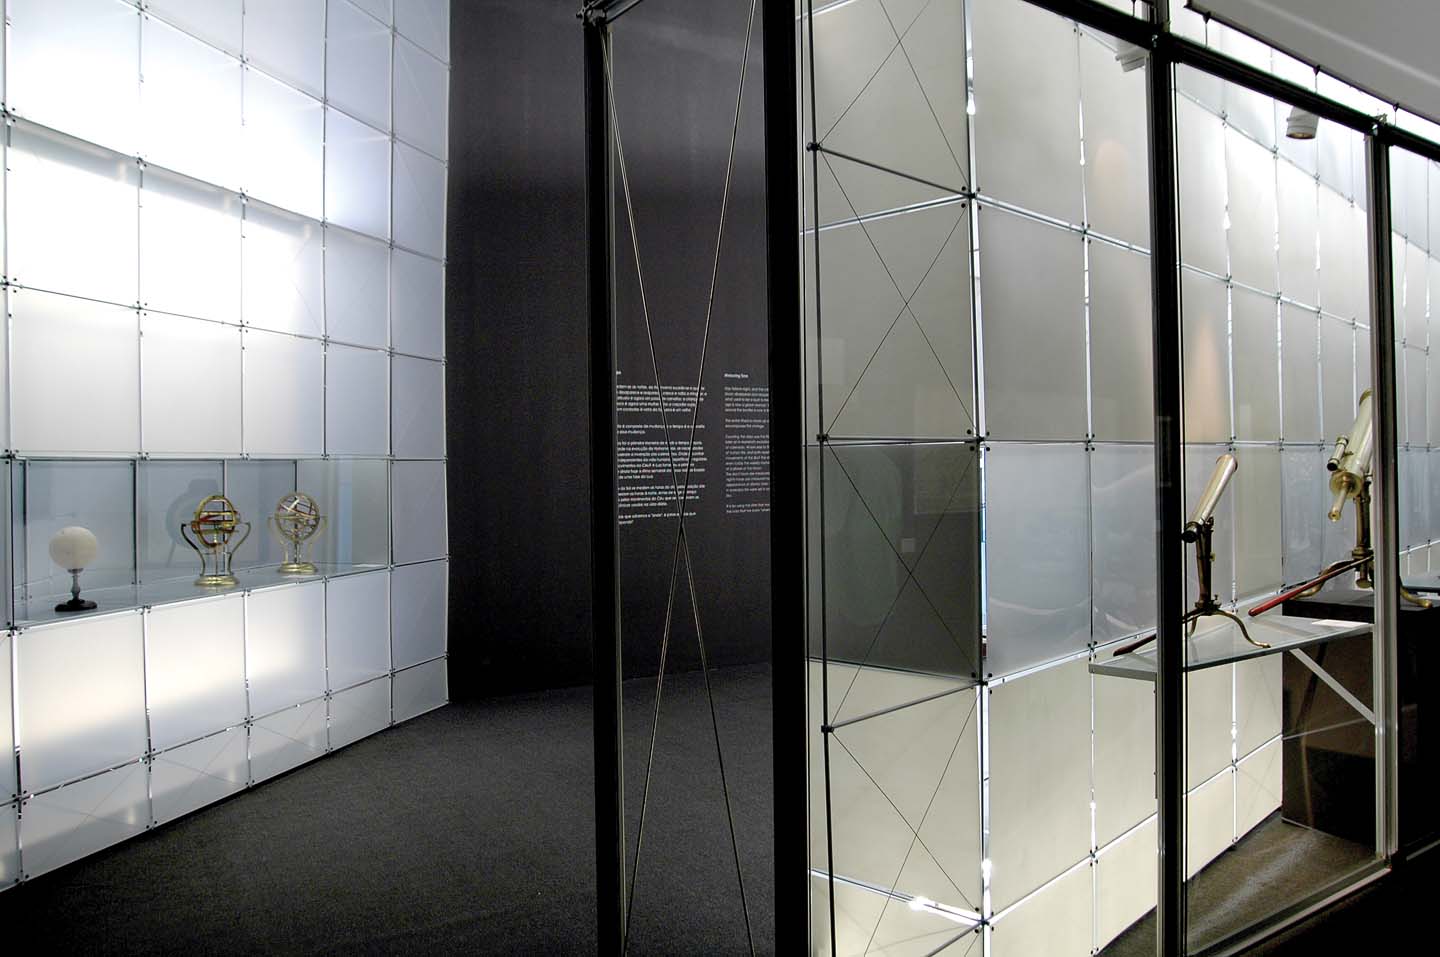 Exhibition Laboratory of The World